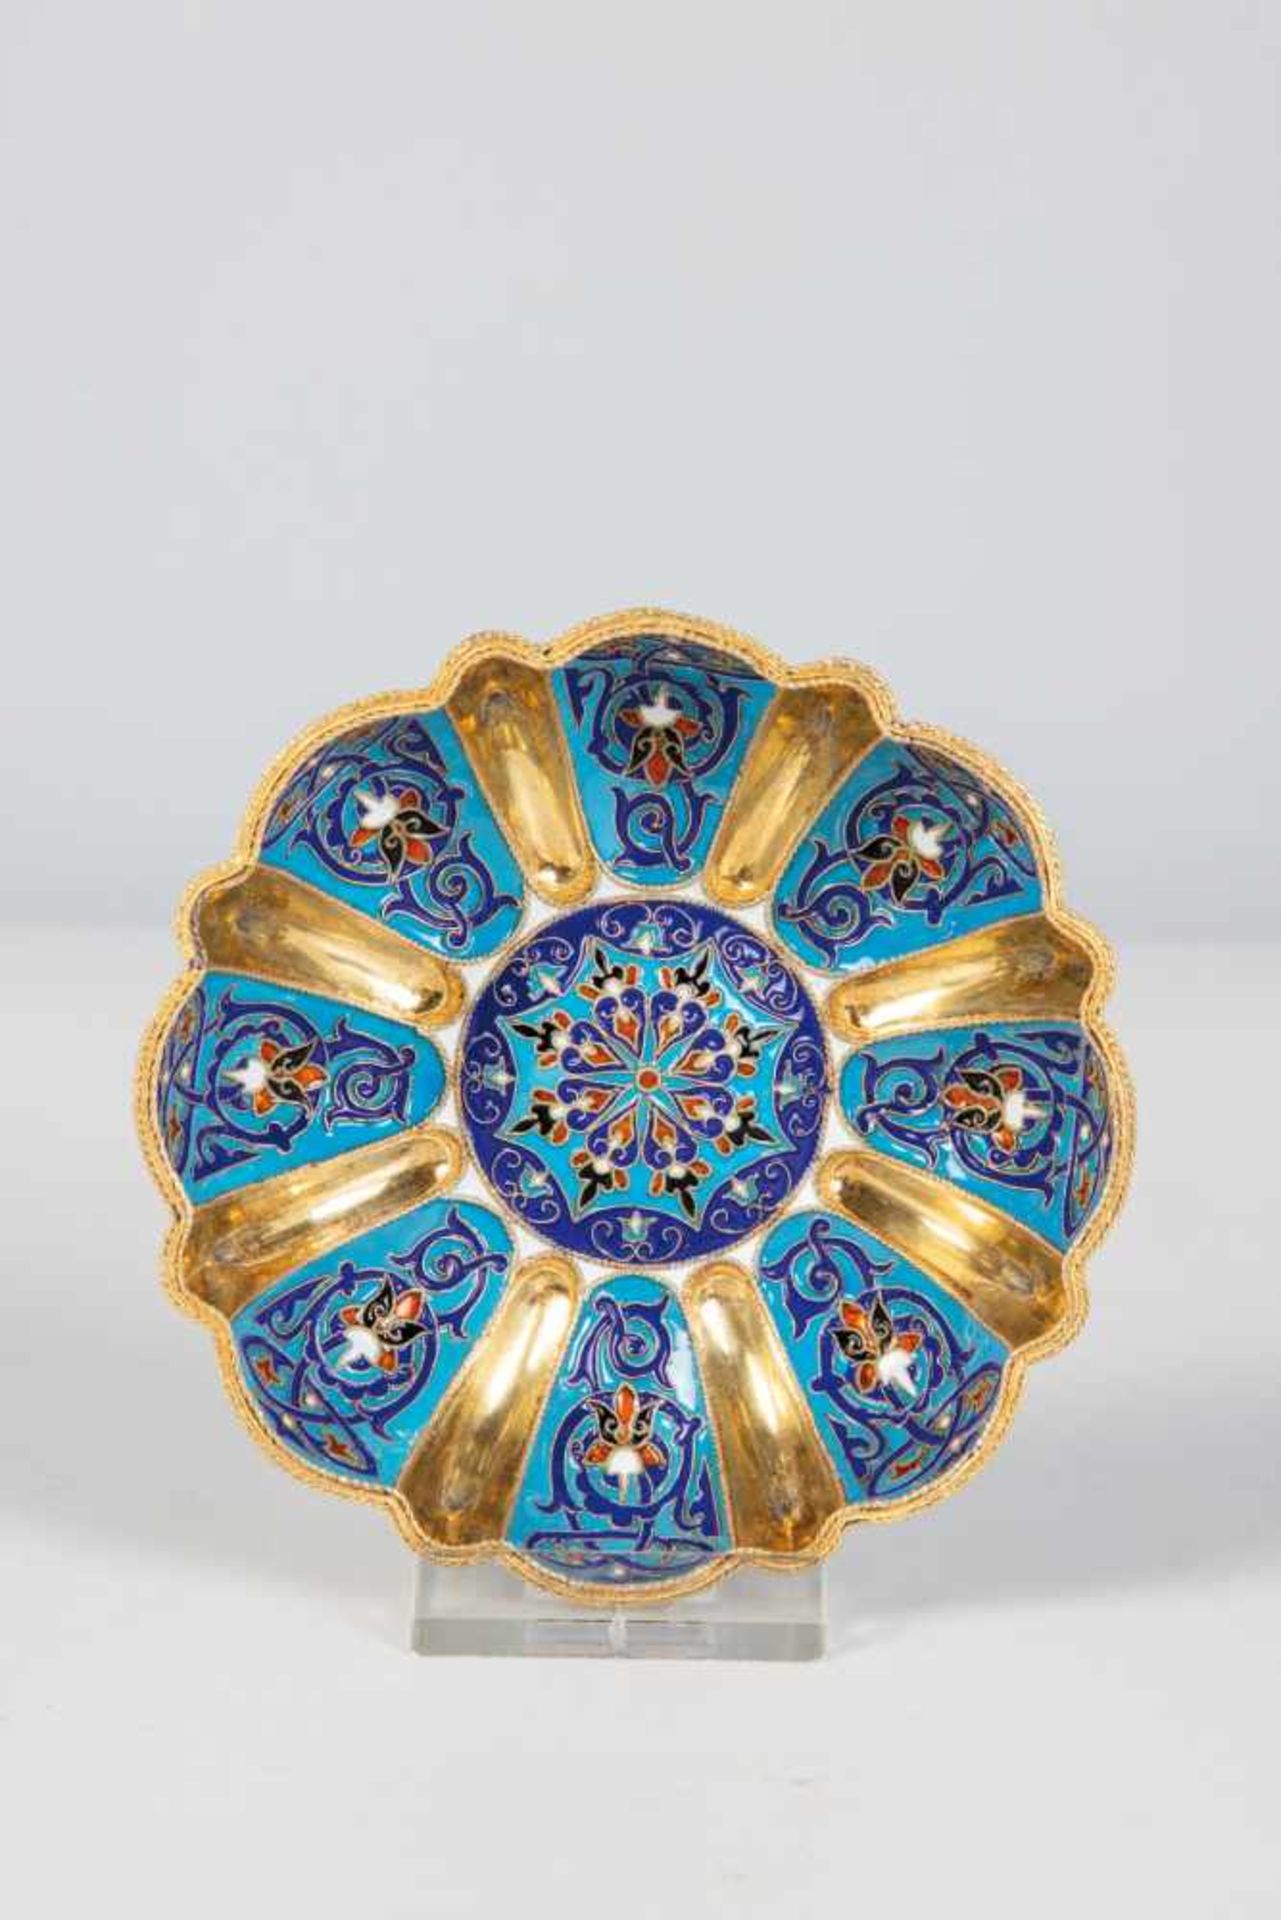 A silver-gilt and cloisonné enamel bowl. Russland, Moskau, Ivan Khlebnikov, 1883. Theinterior and